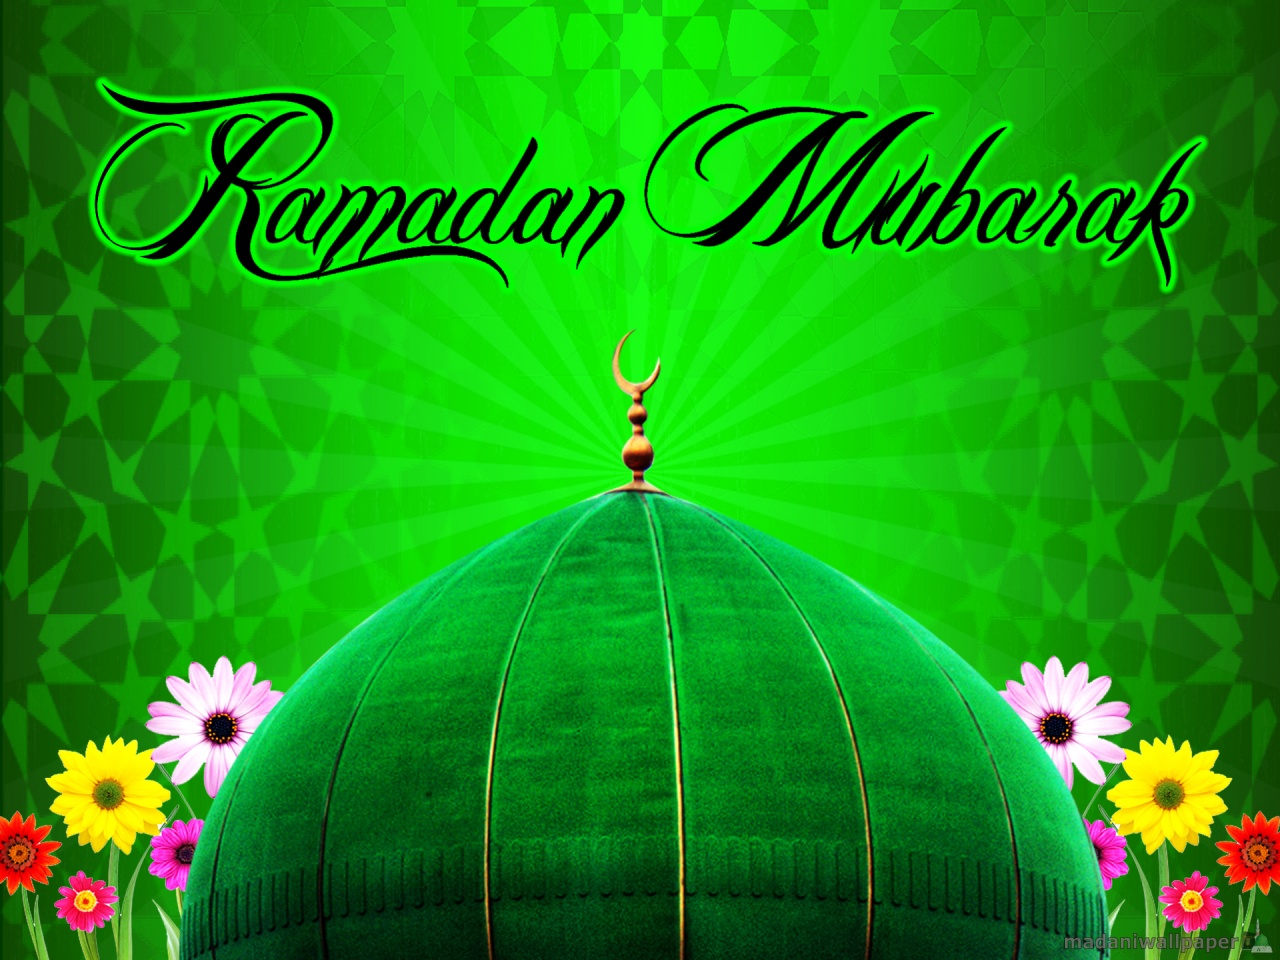 best ramadan wallpaper design background 2013